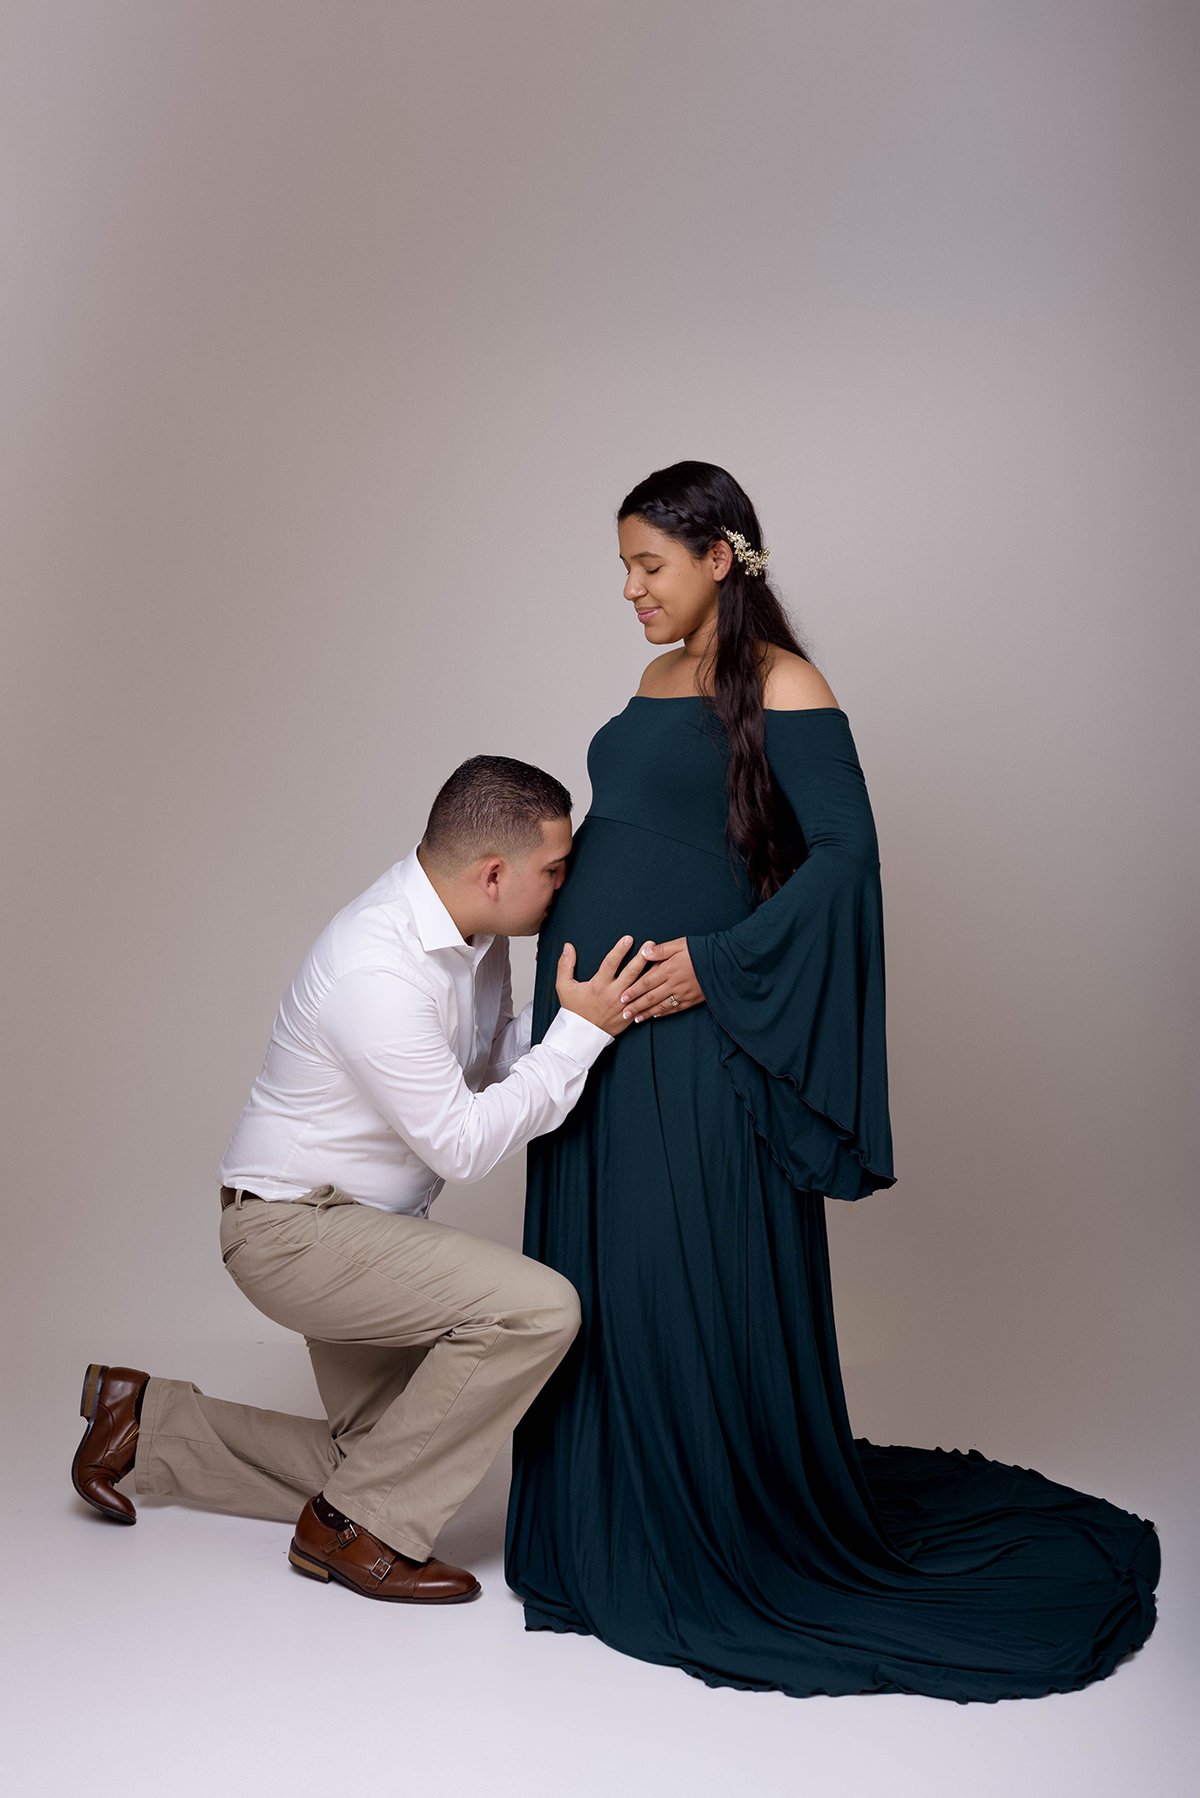 maternity-pregnancy-photographer-san-juan-puerto-rico-teal-dress-gown-long-sleeve-fotografa-maternidad-embarazo-03.jpg